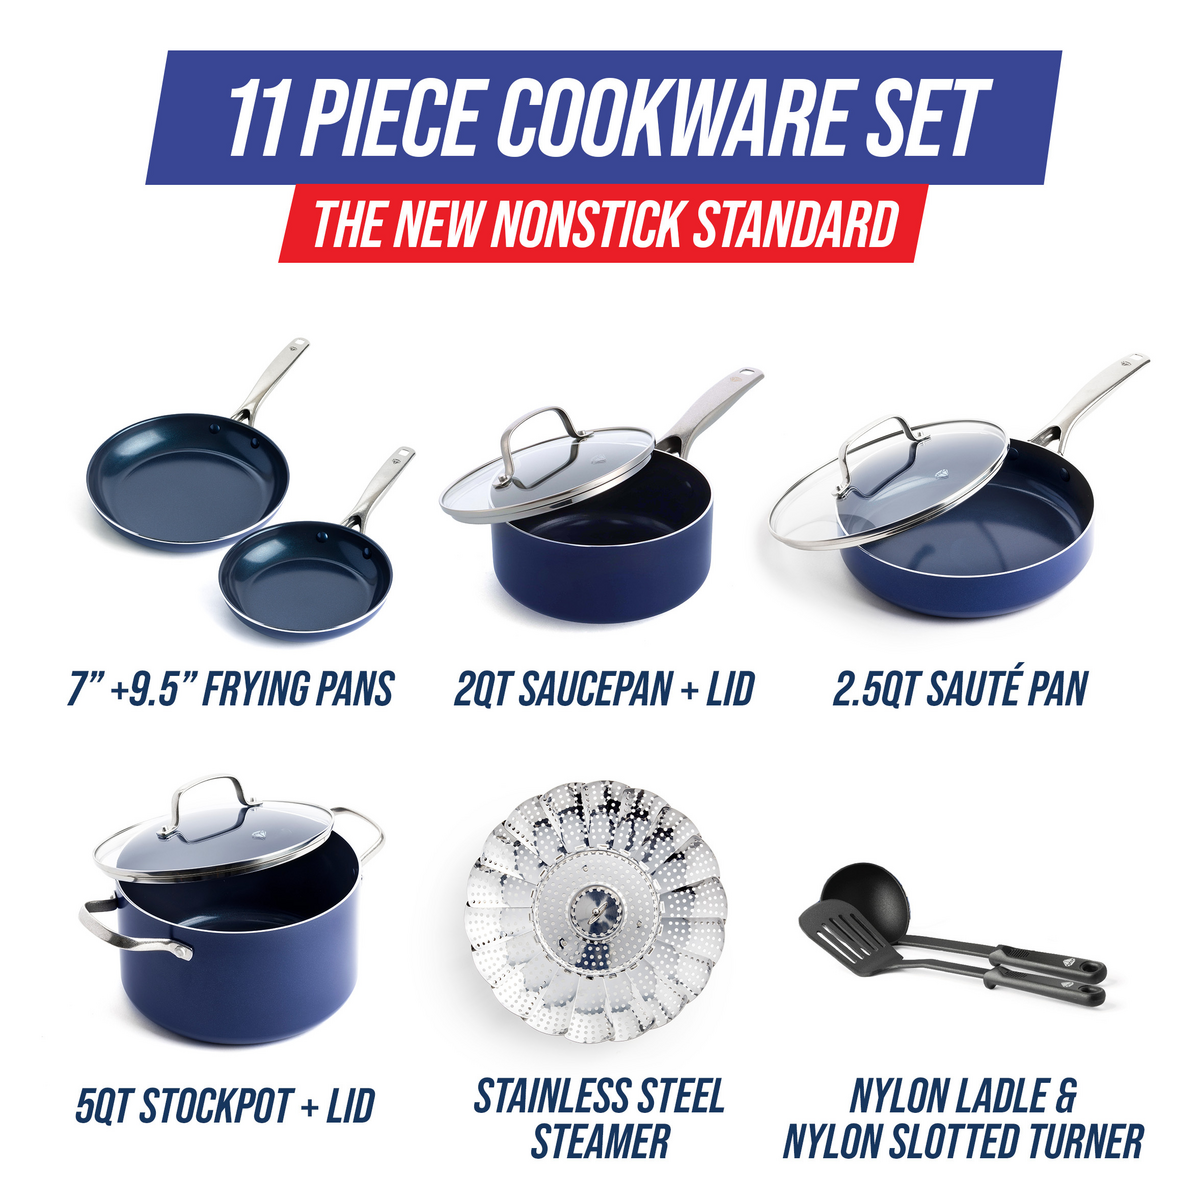 Blue Diamond 8 Piece Toxin Free Enhanced Ceramic Non Stick Cookware Set